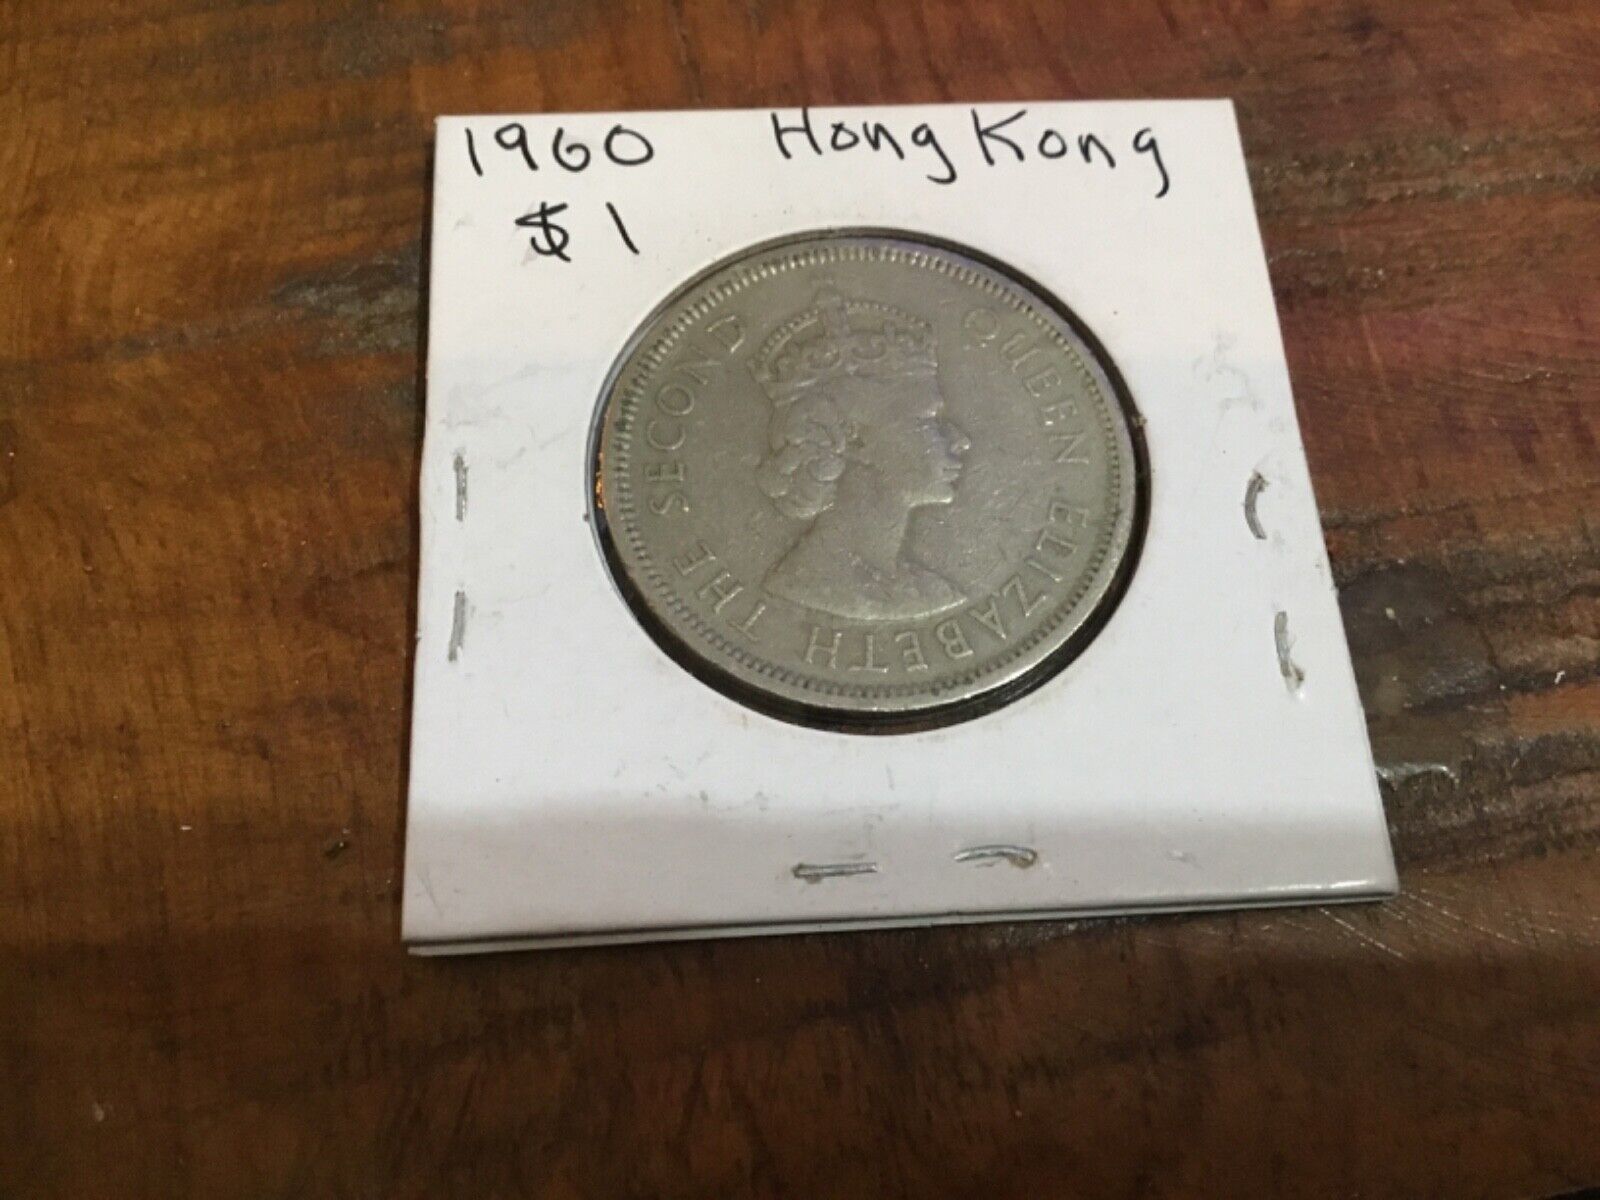 1960 QUEEN ELIZABETH THE SECOND HONG KONG ONE DOLLAR COIN # 1025